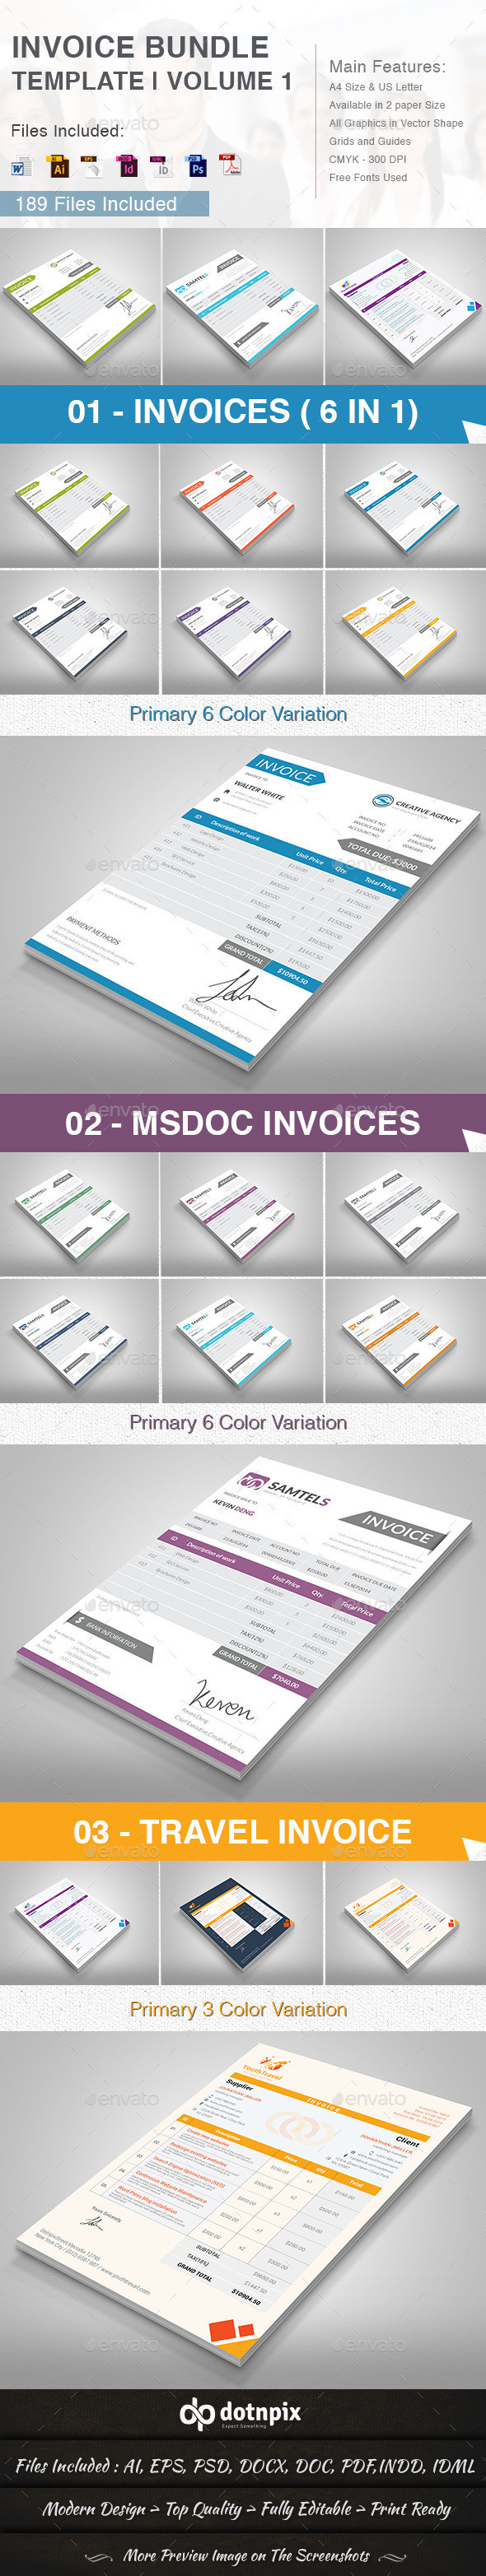 Invoice bundle template invoices ms word bill photoshop graphicriver dotnpix